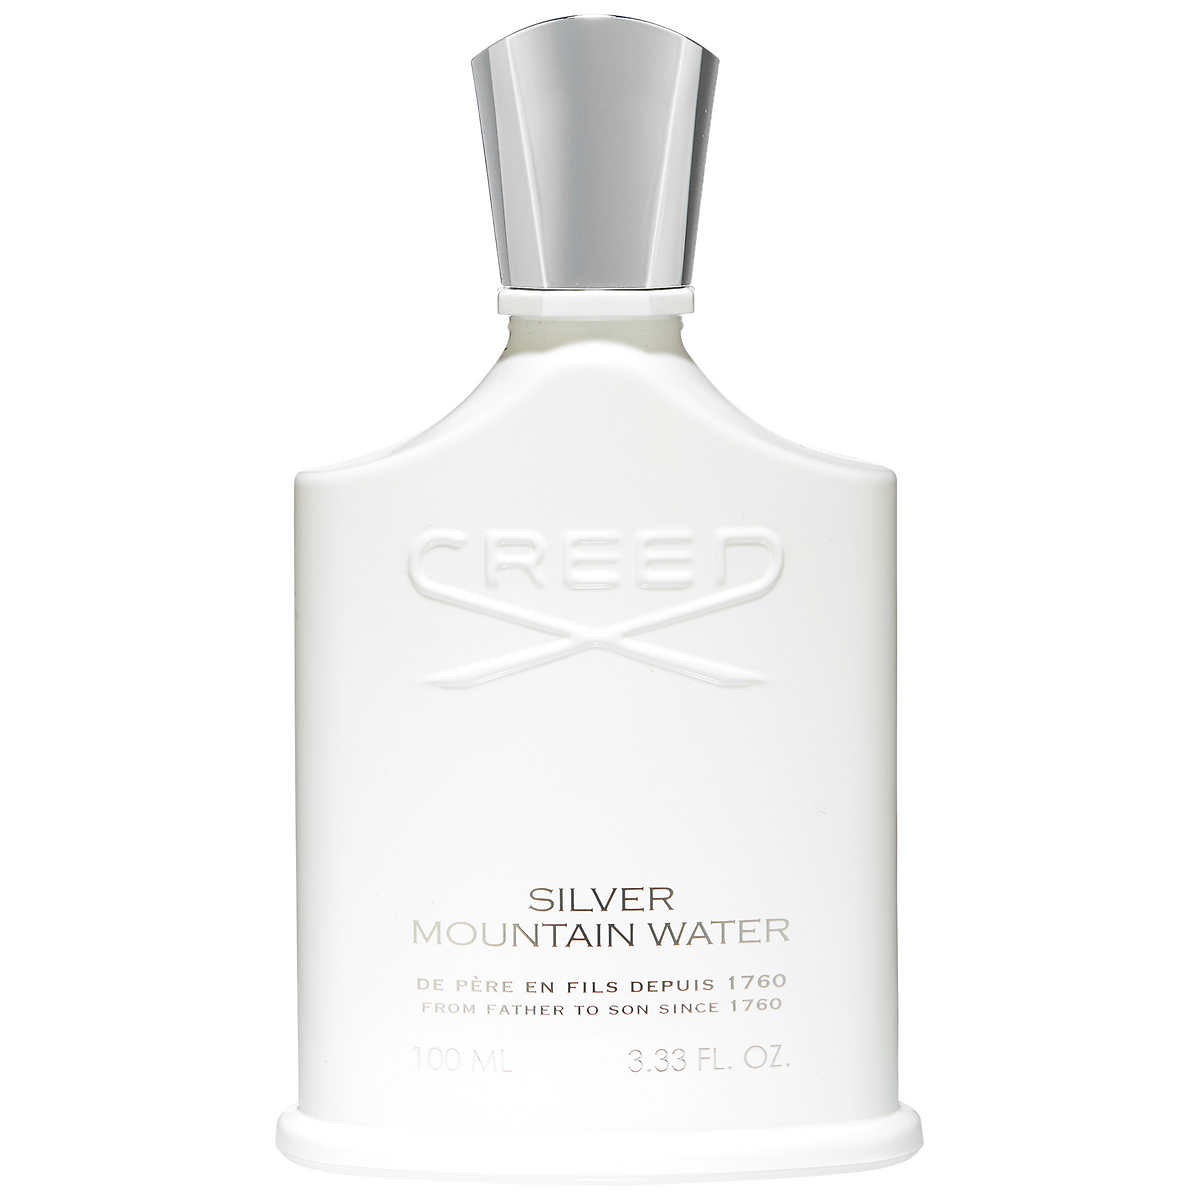 Creed Silver Mountain Water, 3.3 fl oz  | Costco信仰银色山泉3.3oz大瓶装